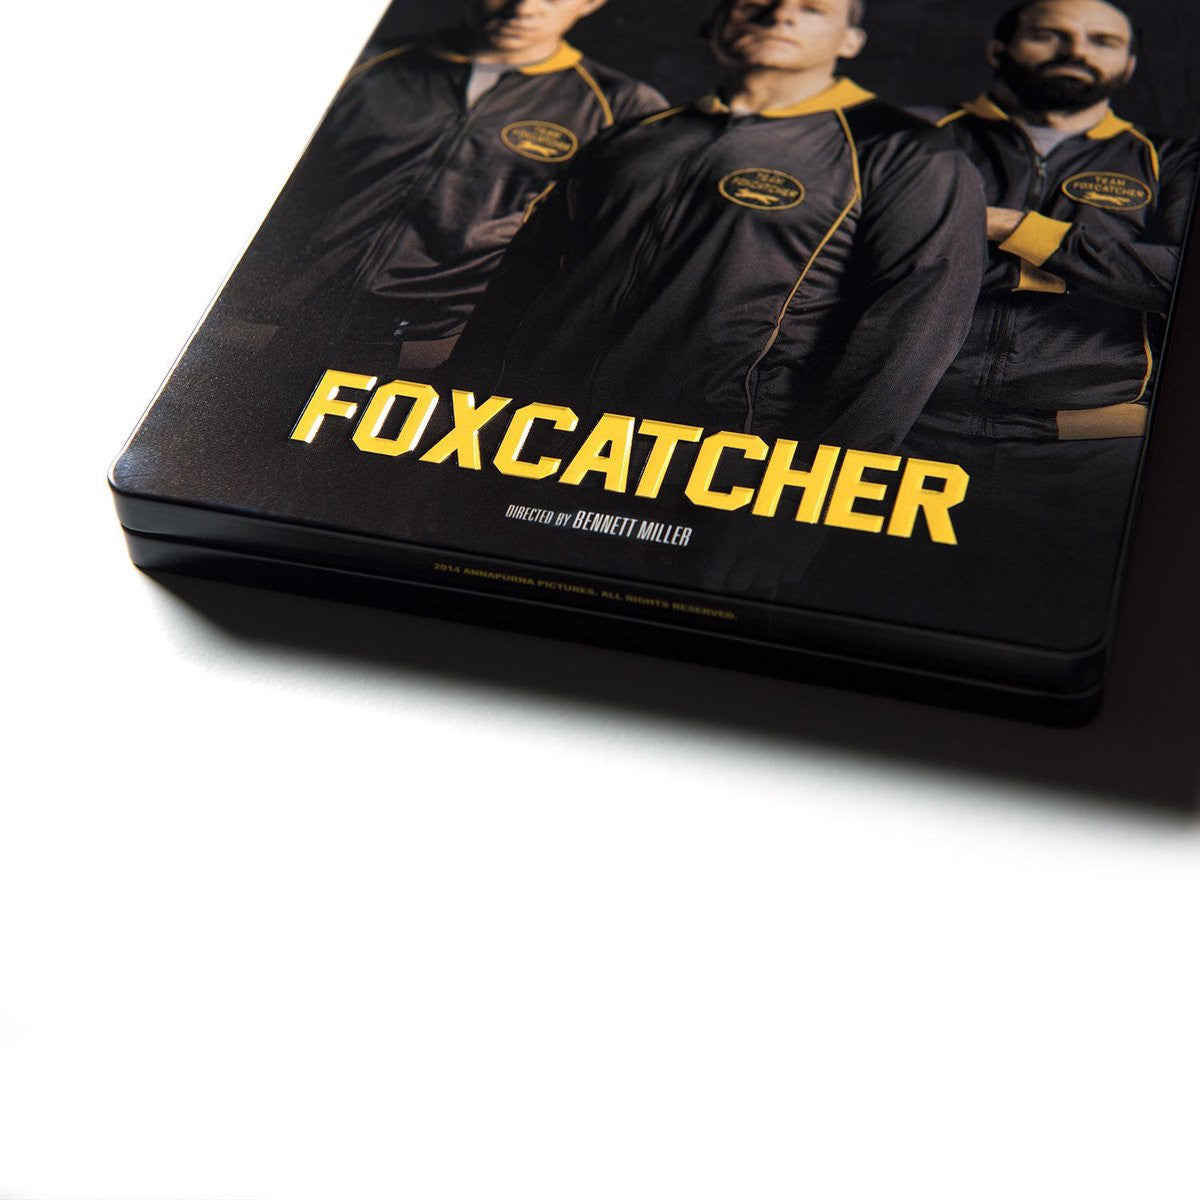 FOXCATCHER Steelbook: Full Slip (Type A)